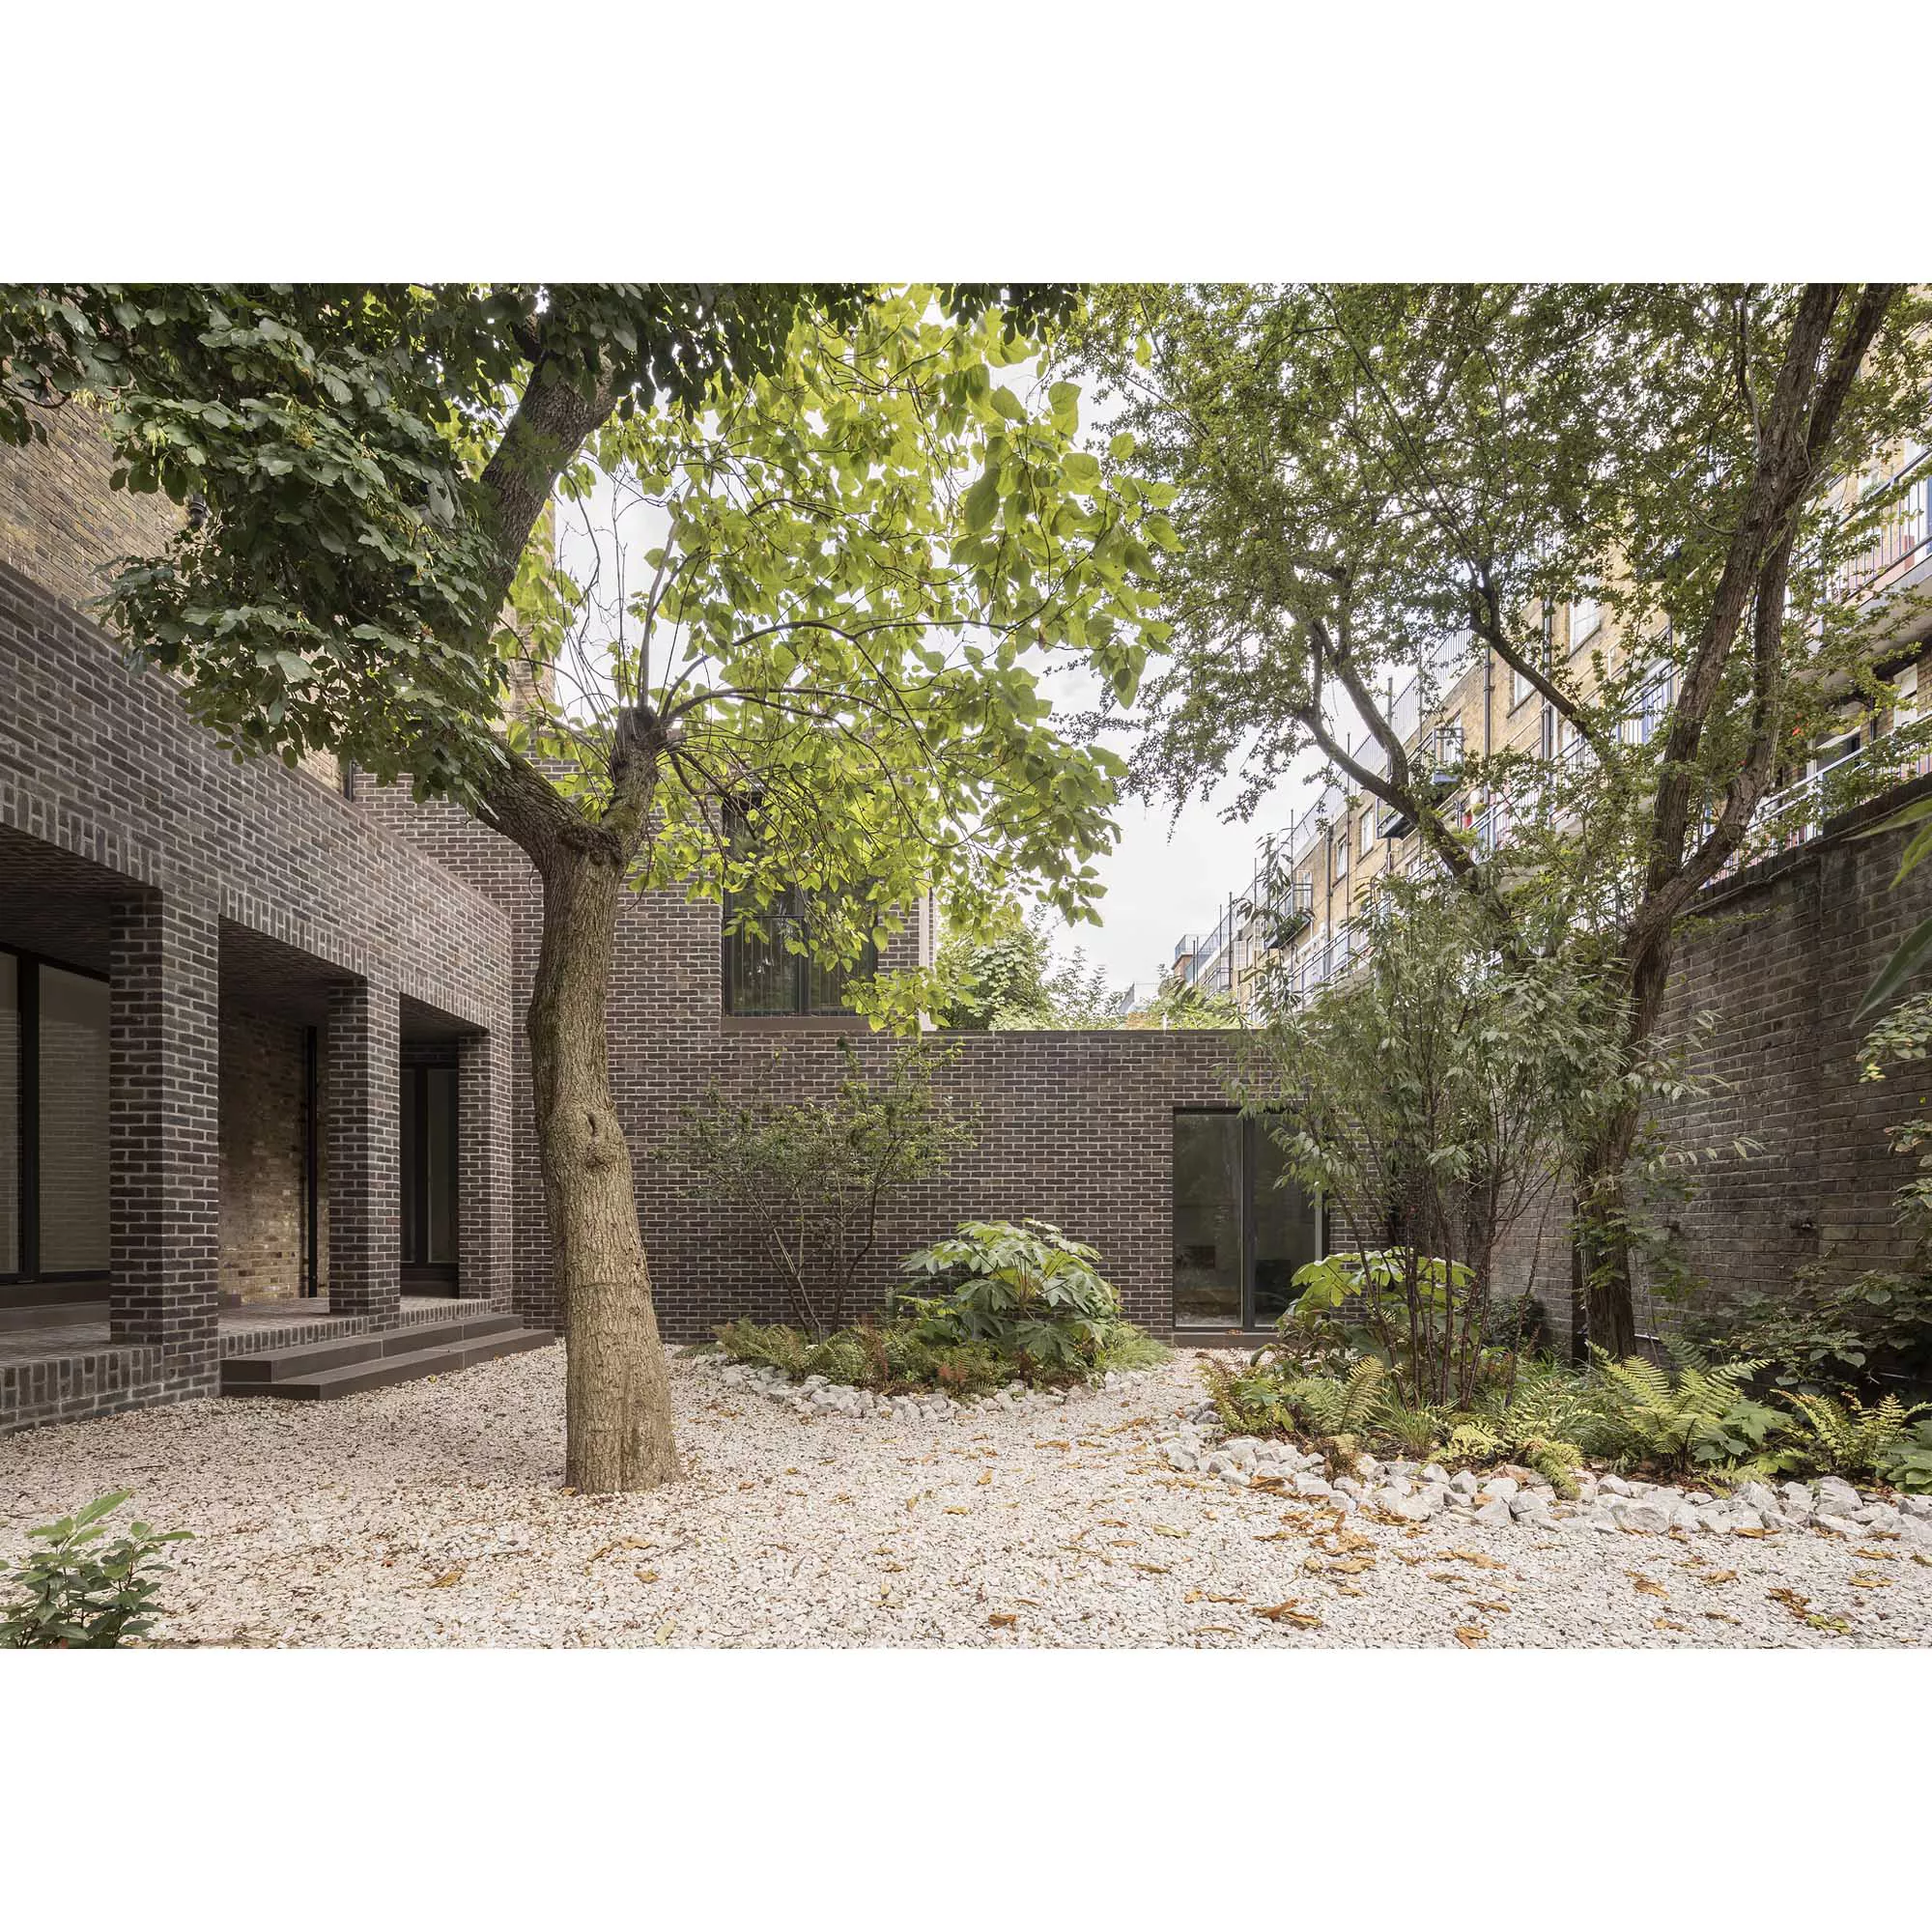 Erbar Mattes Architects Blockmakers Arms Hackney London pub conversion courtyard